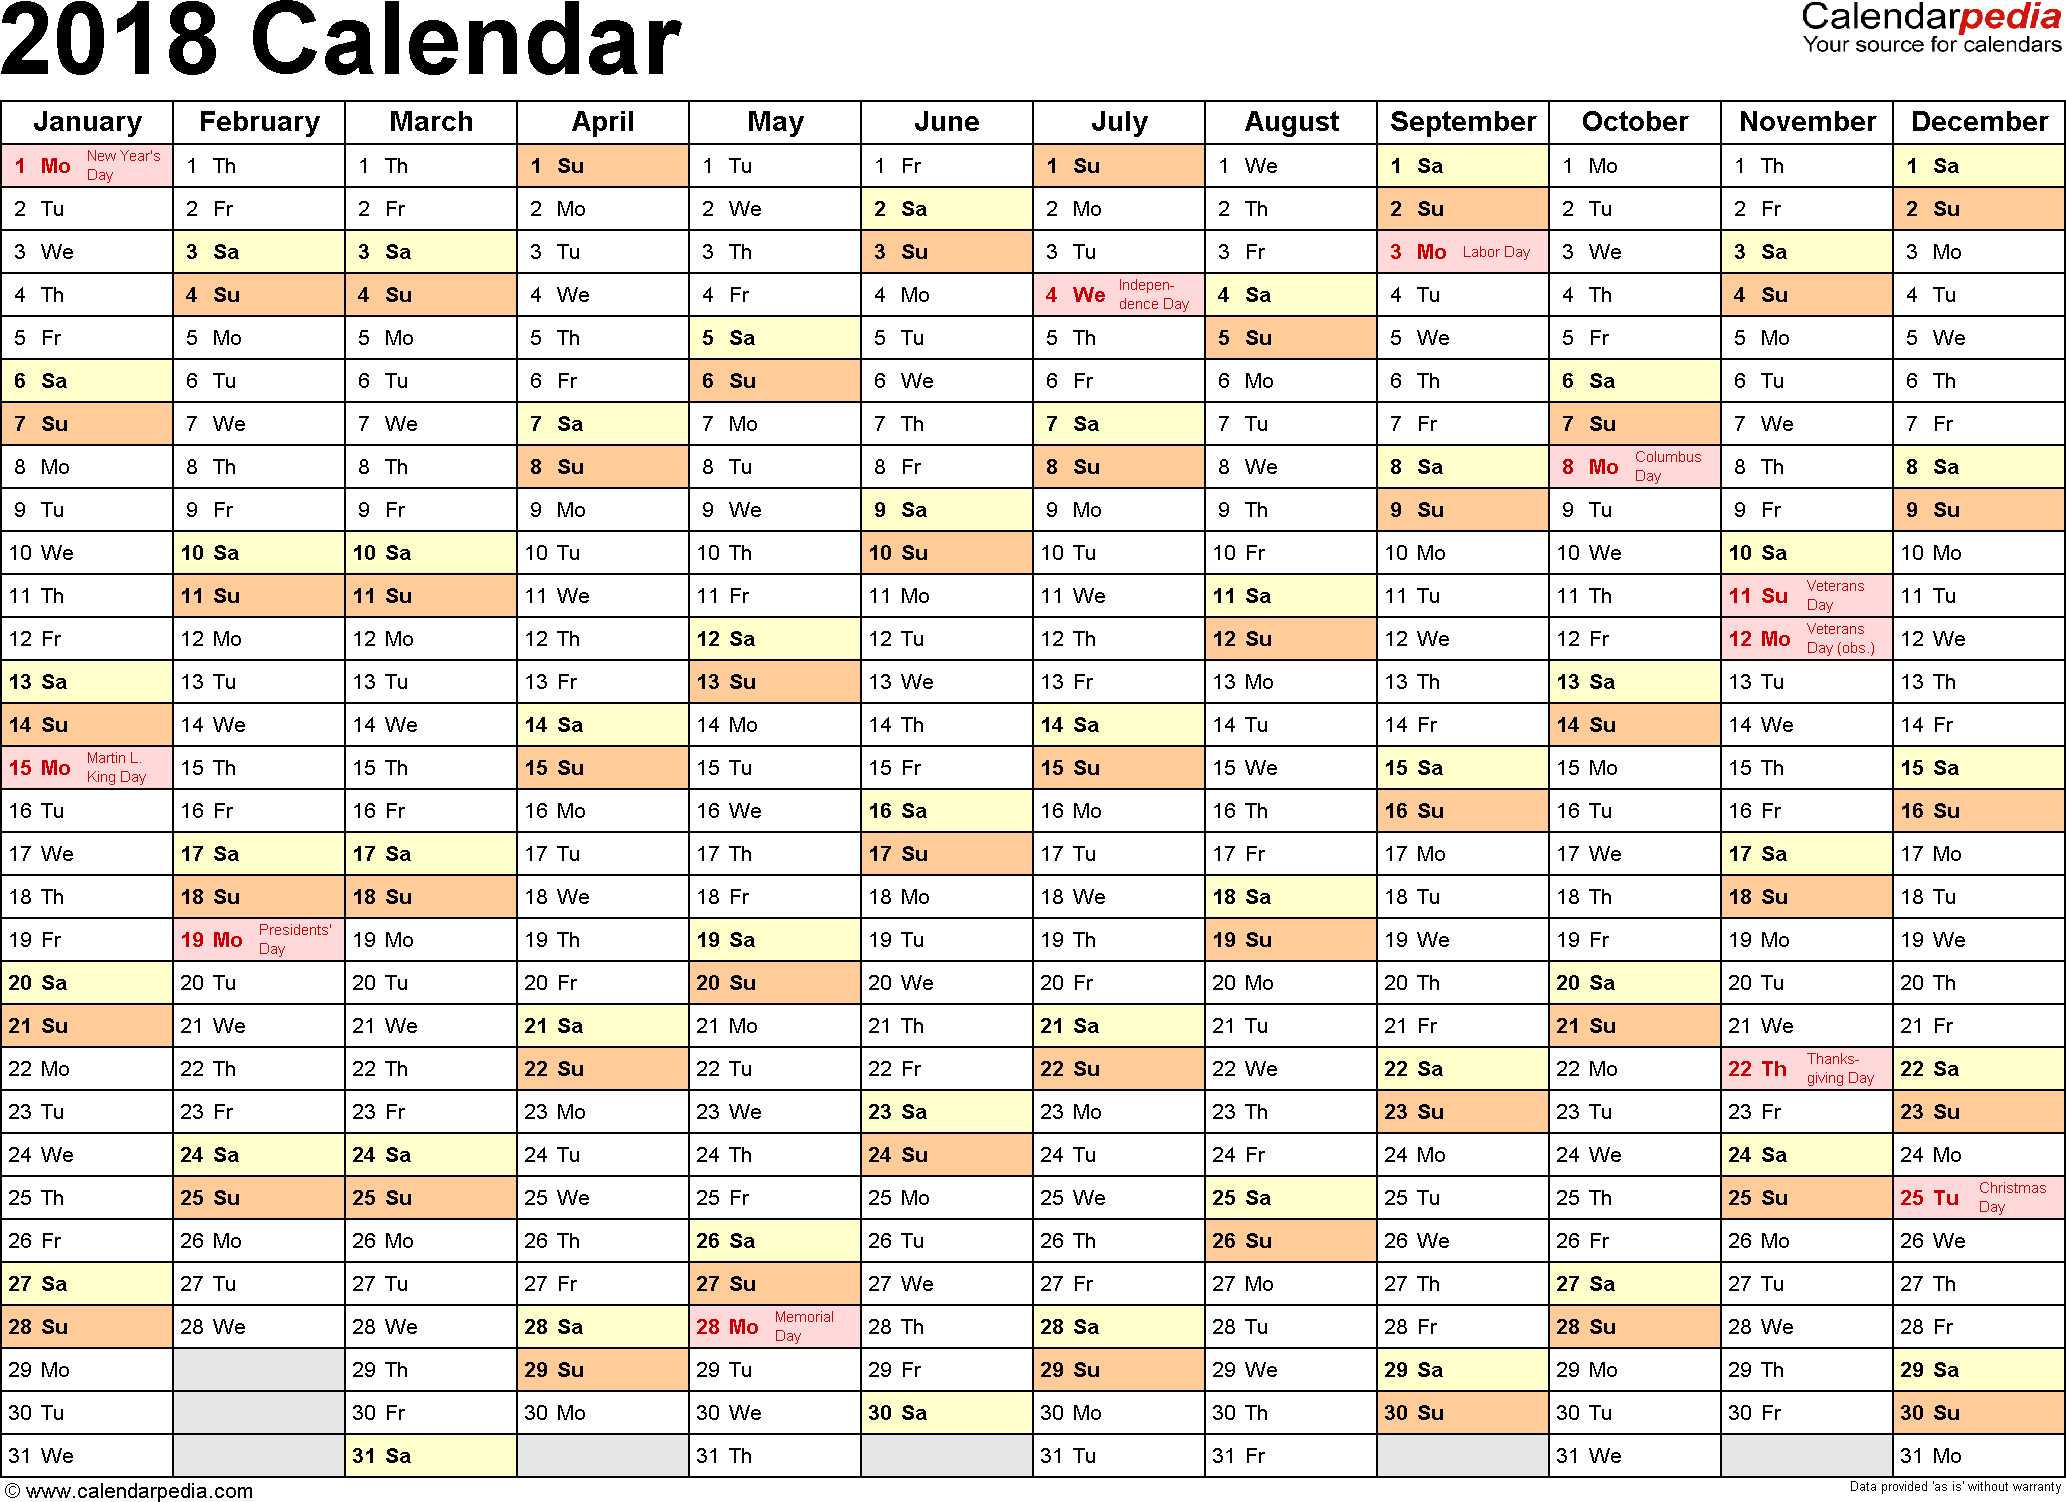 Calendar Spreadsheet 2018 Intended For 2018 Calendar  Download 17 Free Printable Excel Templates .xlsx